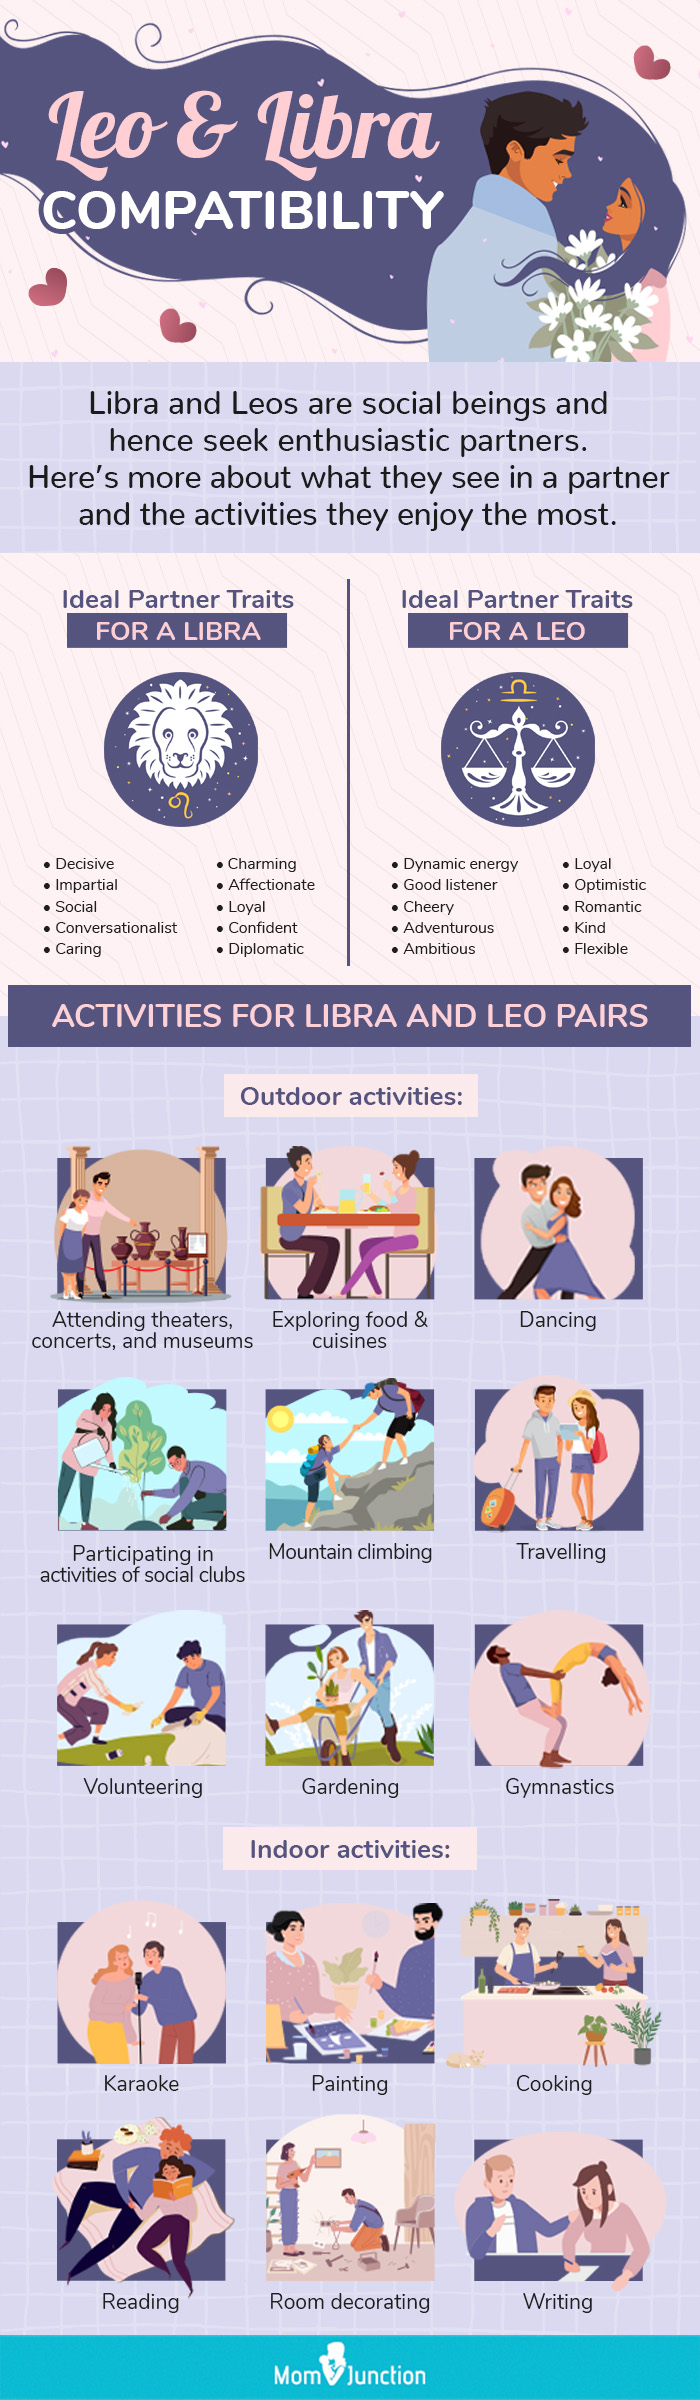 leo & libra relationship (infographic)